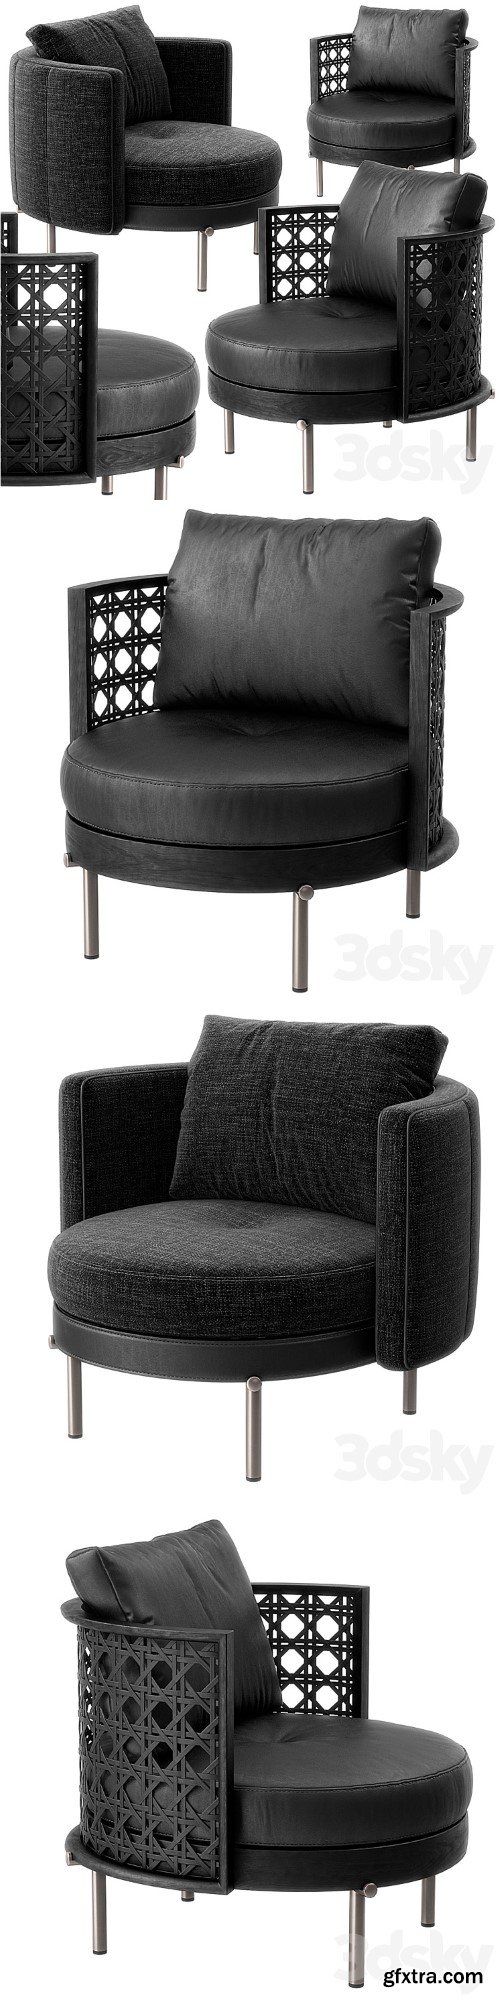 Torii armchairs by minotti